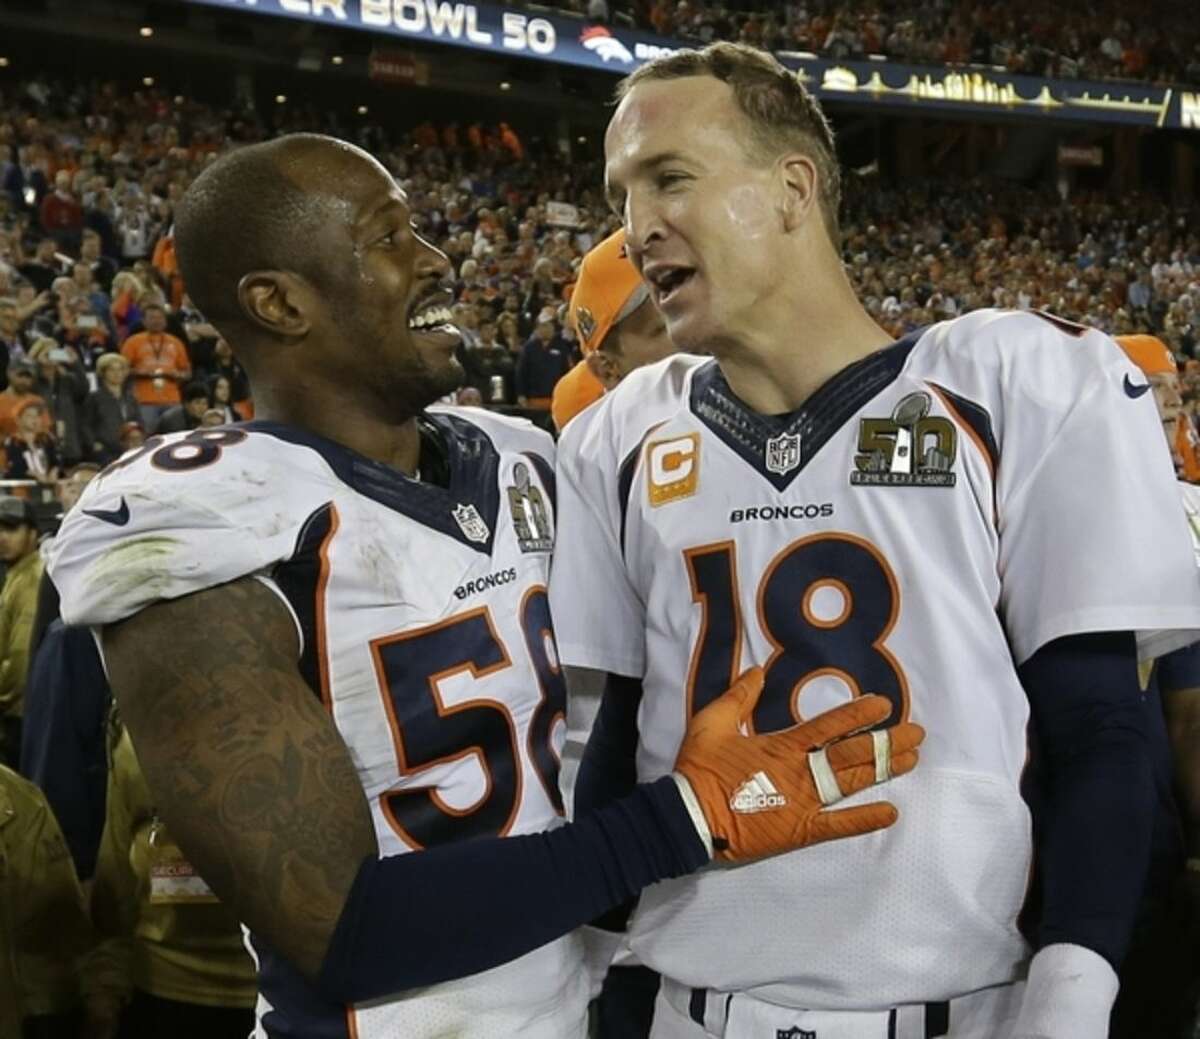 Denver Broncos’ Von Miller (58) and Peyton Manning (18) celebrate after the NFL Super Bowl 50 football game Sunday, Feb. 7, 2016, in Santa Clara, Calif. The Broncos beat the Panthers 24-10. (AP Photo/David J. Phillip)